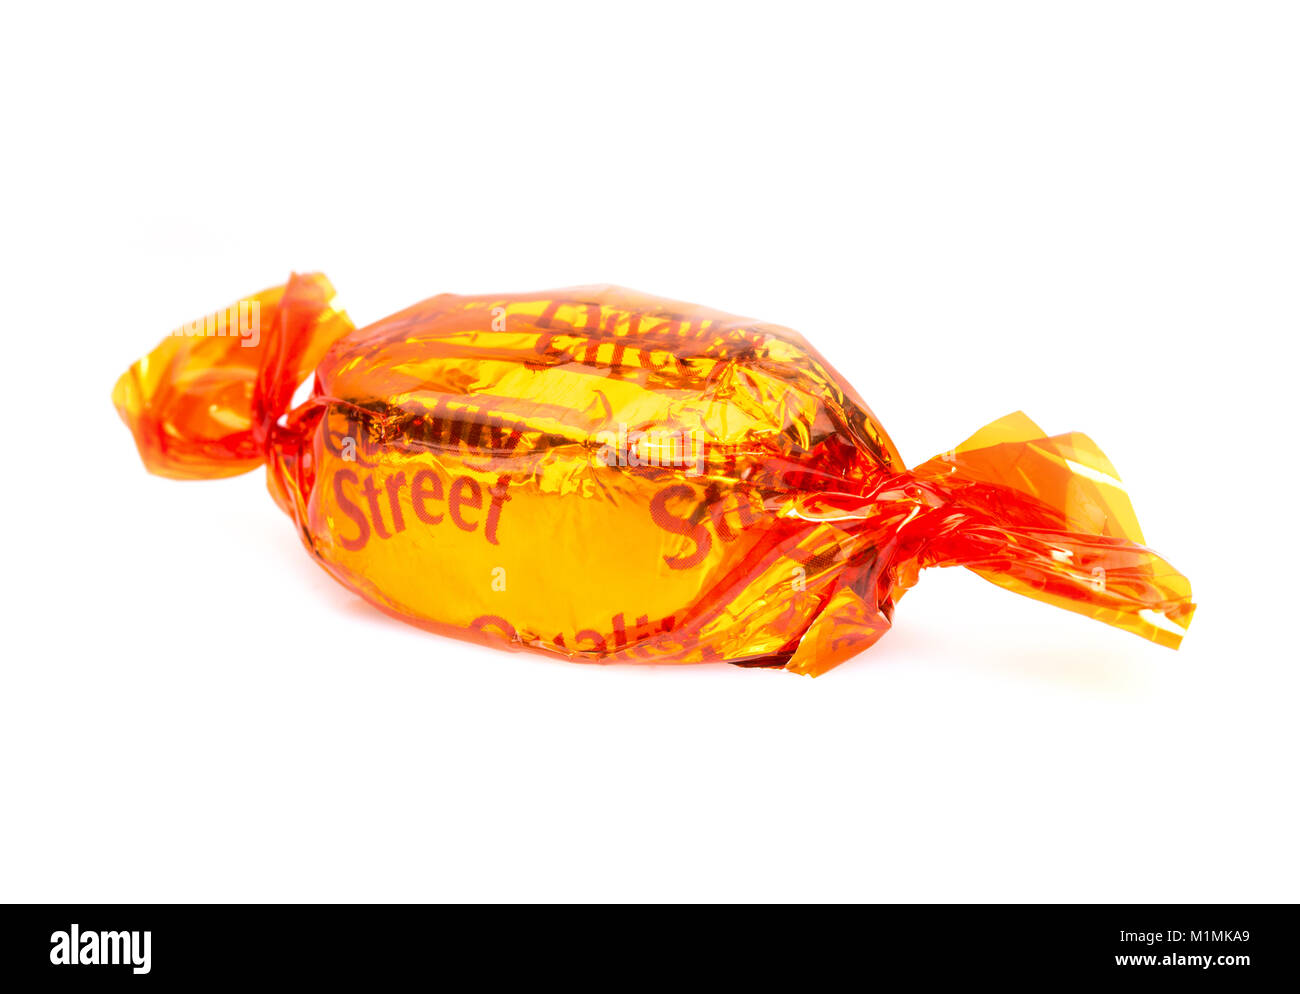 Orange Creme Quality Street chocolate on a white background Stock Photo